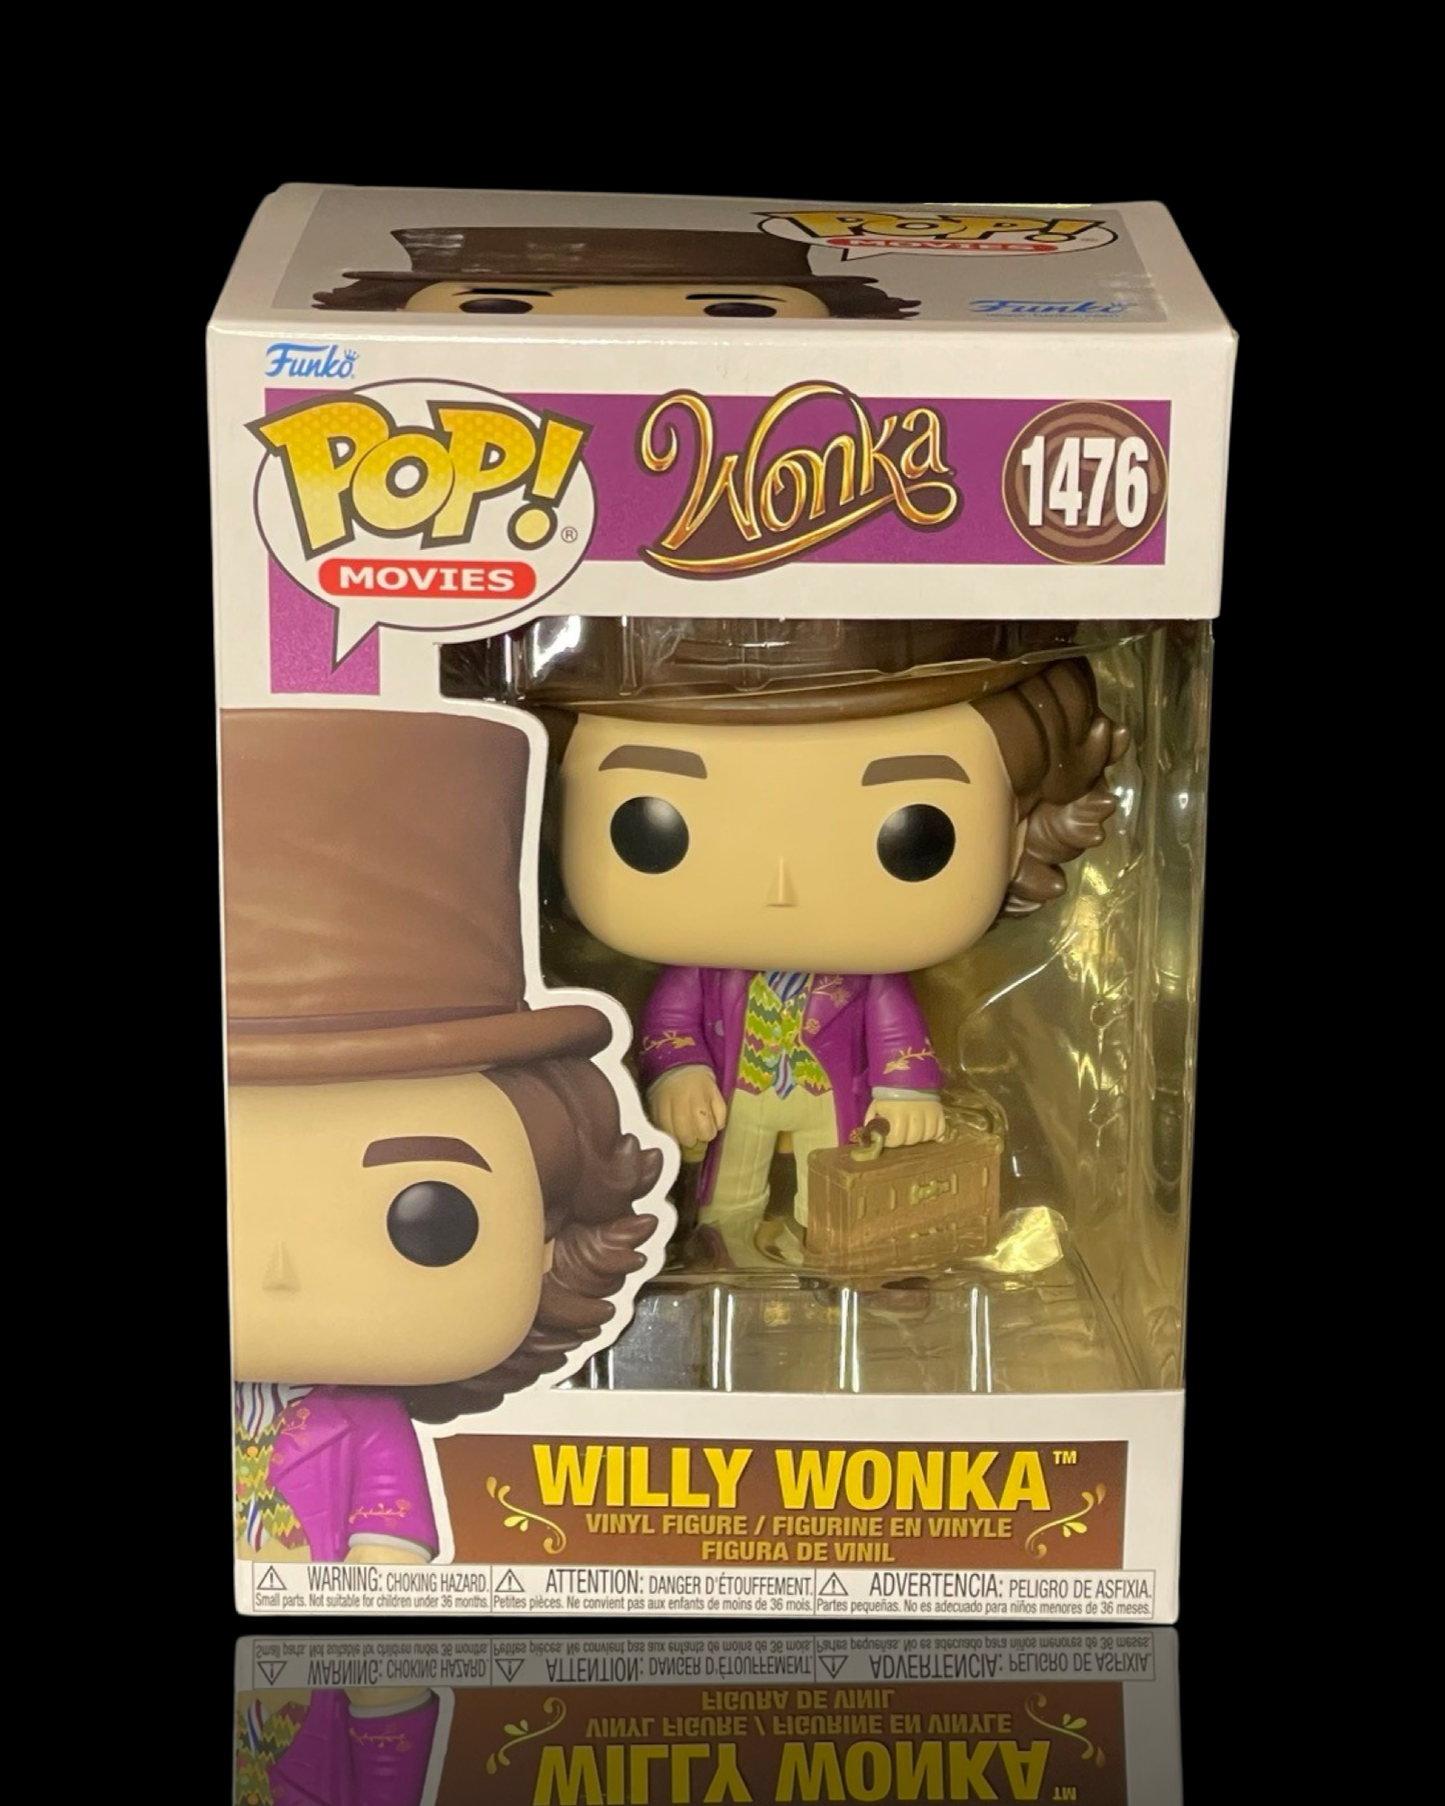 Wonka: Willy Wonka